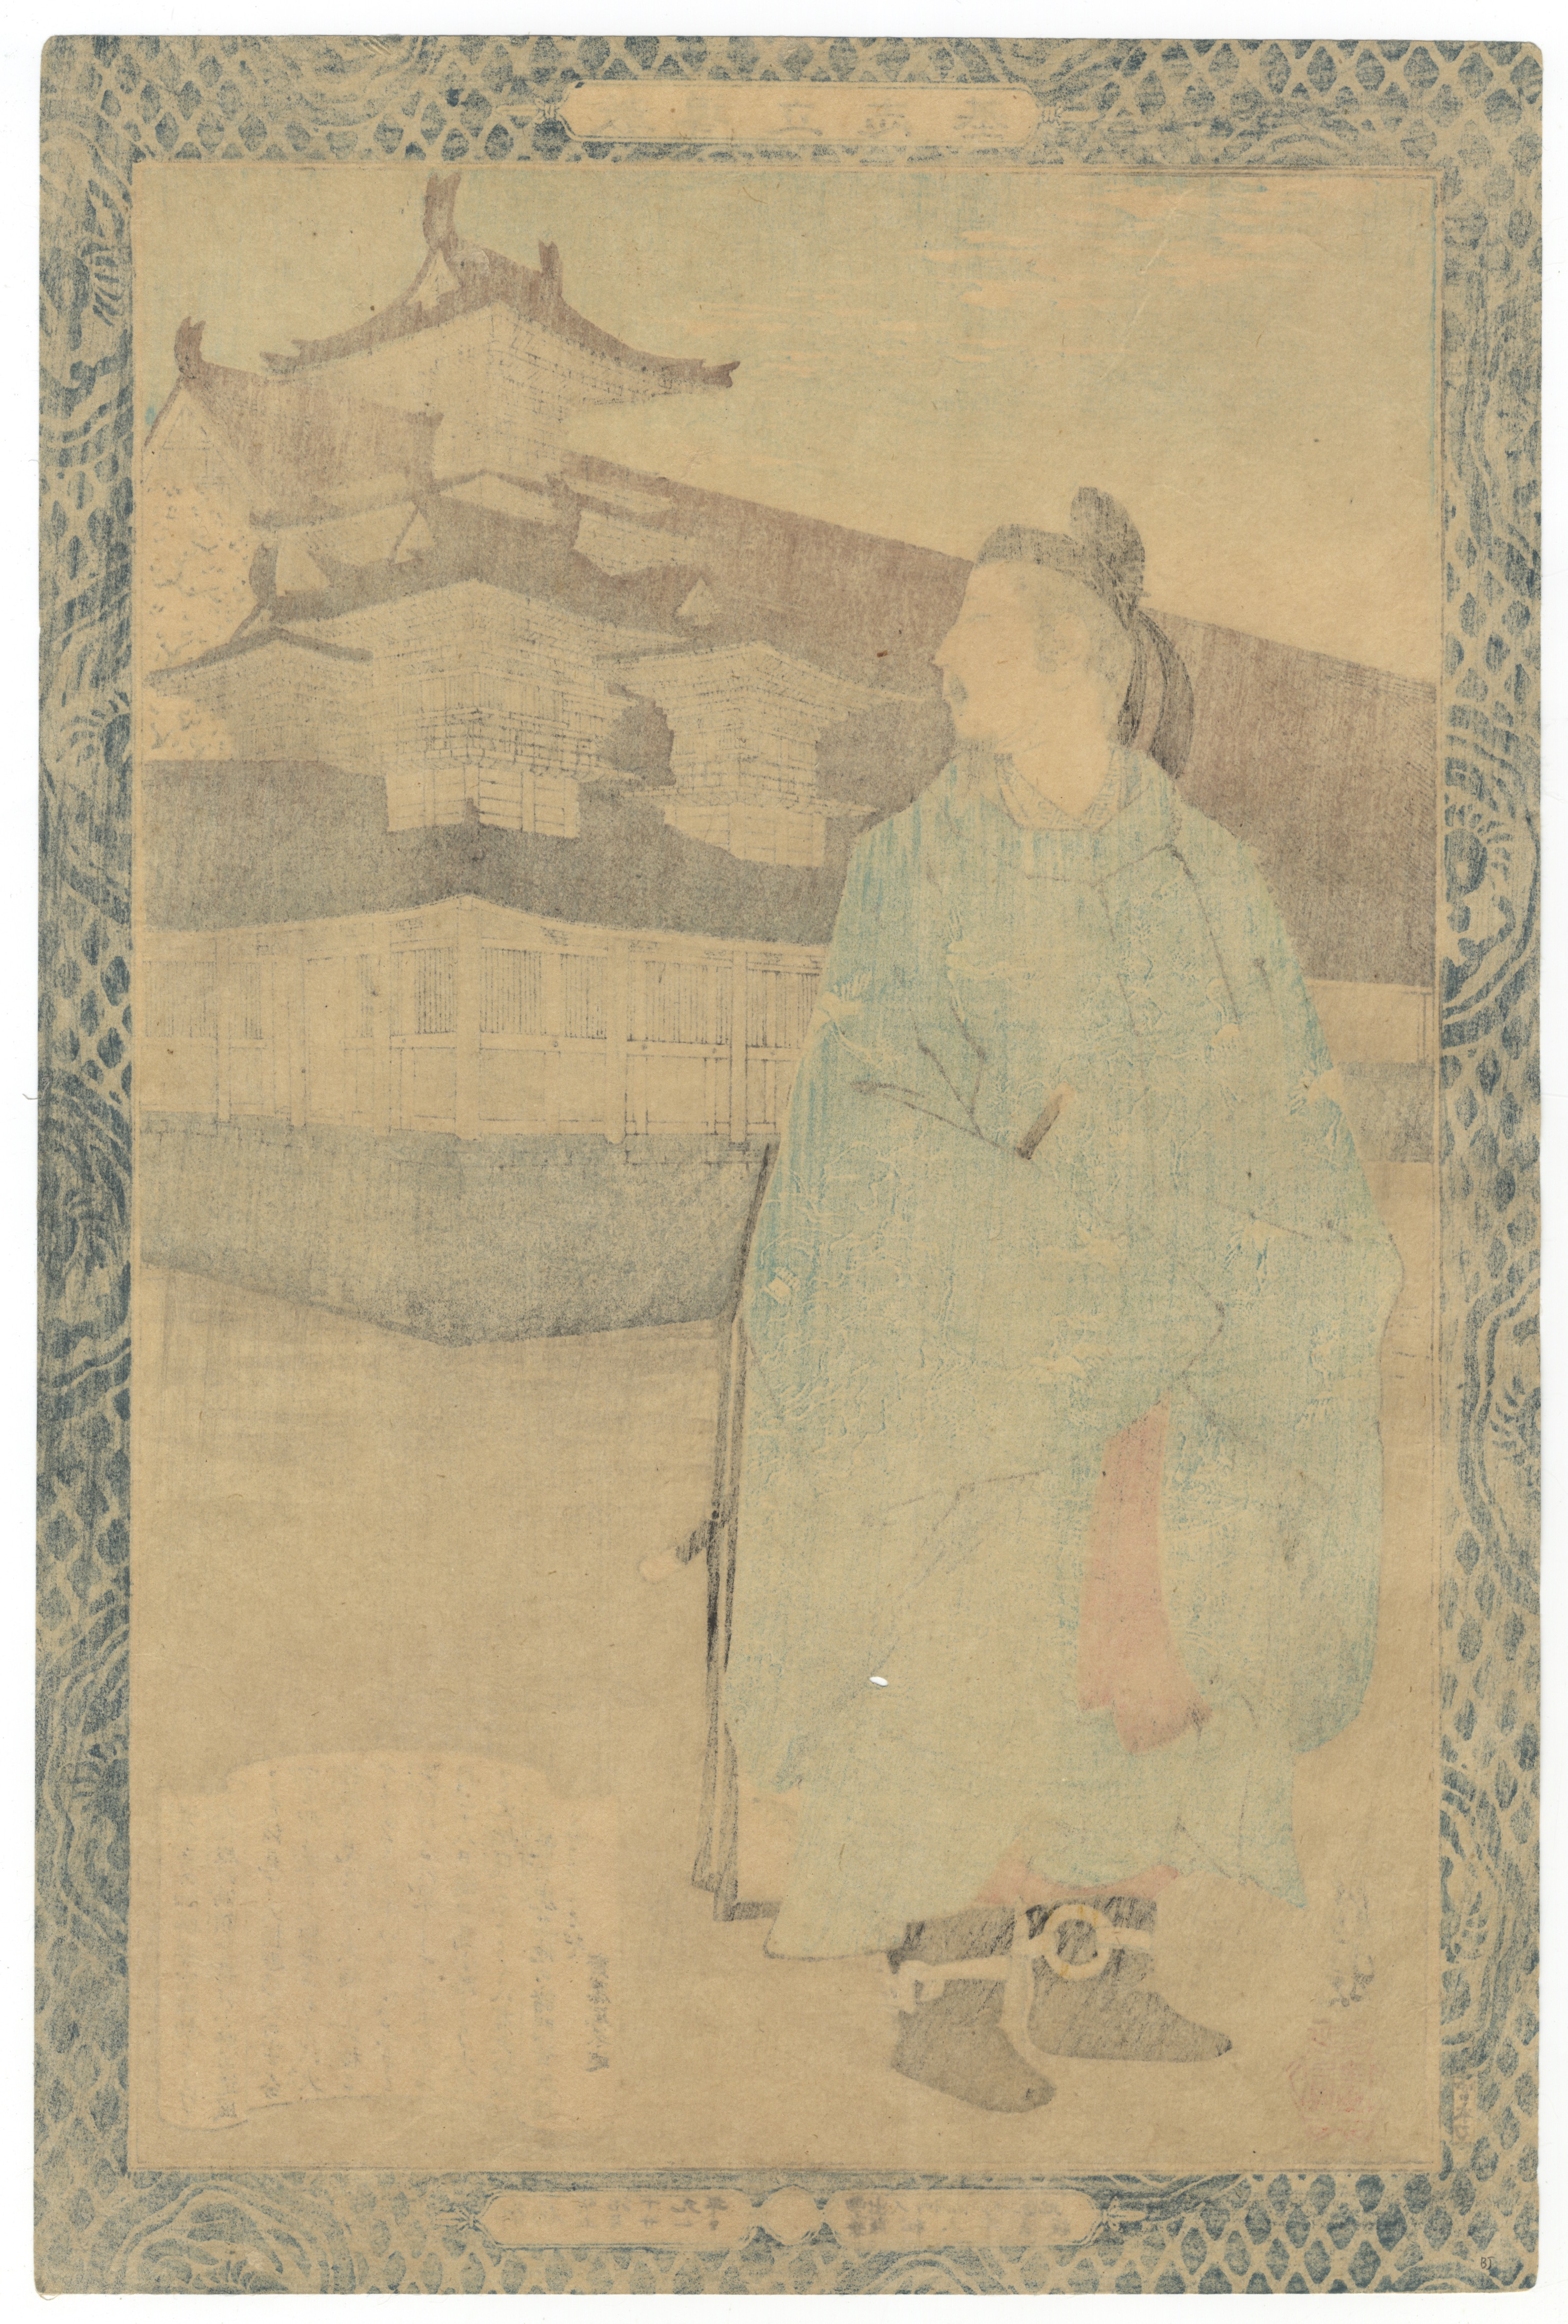 Toshikata, Kiyochika, Original Japanese Woodblock Print - Image 5 of 5